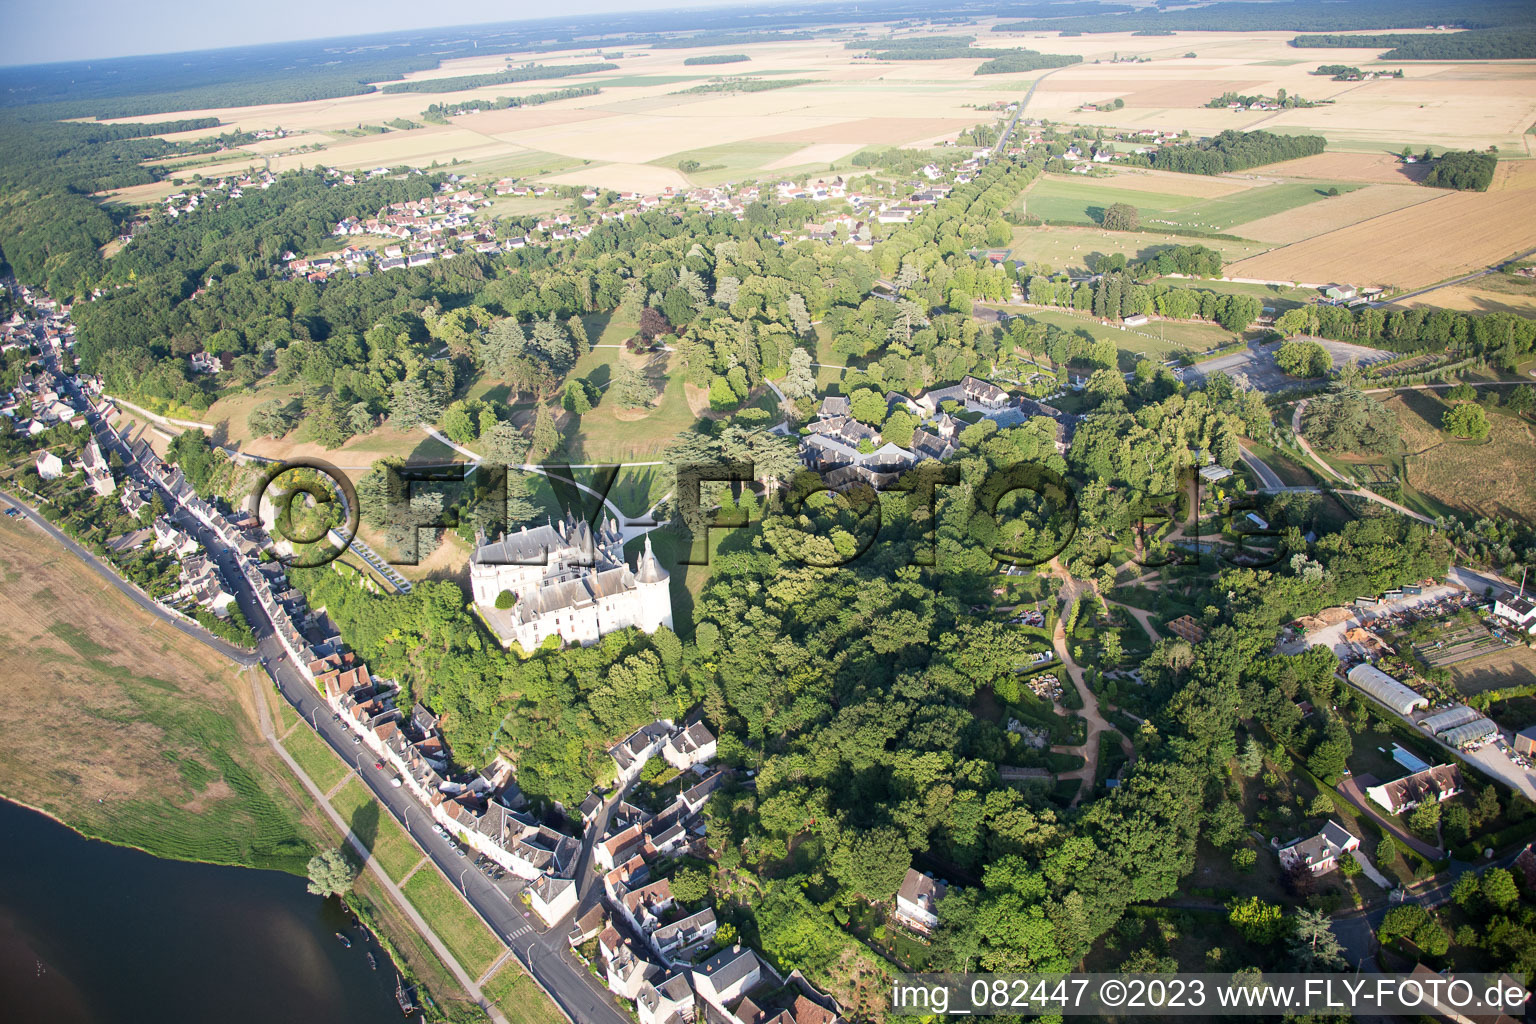 Chaumont-sur-Loire im Bundesland Loir-et-Cher, Frankreich aus der Drohnenperspektive